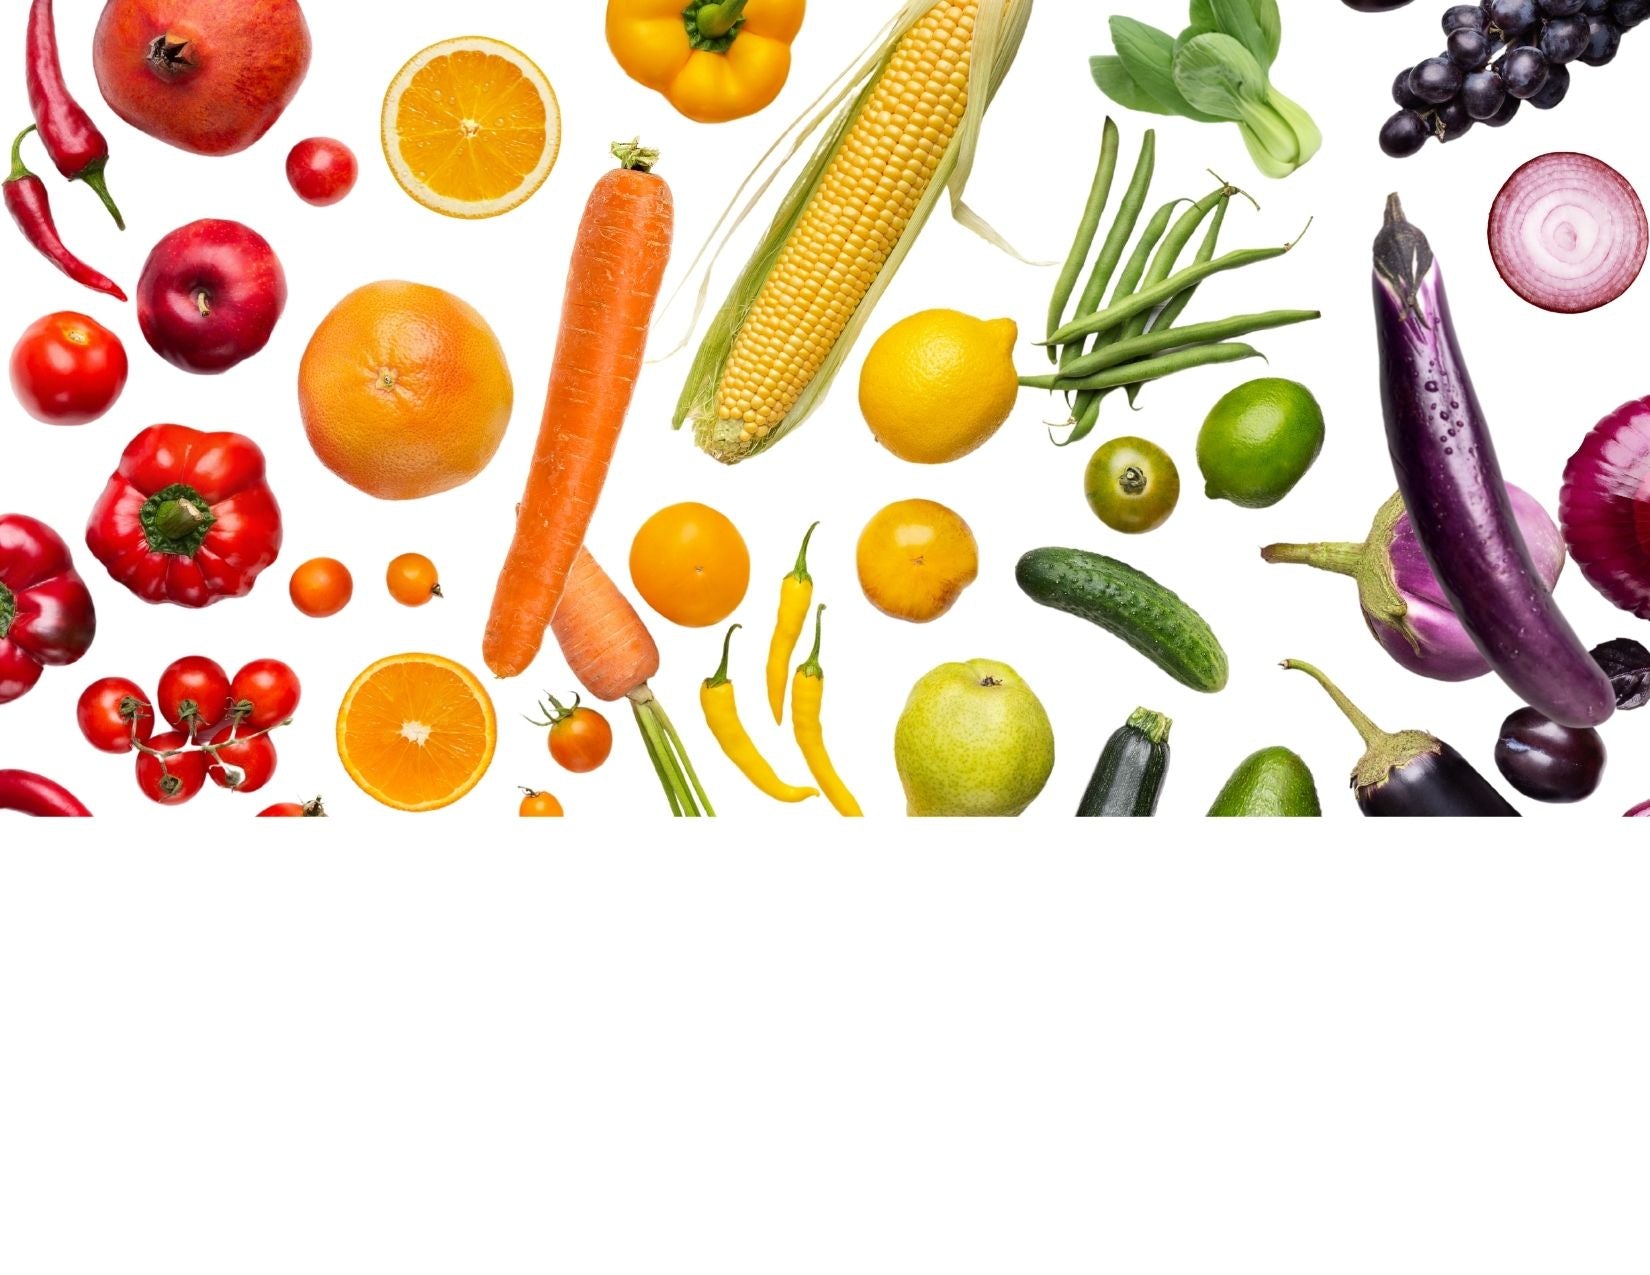 Wholesale Produce Fresh Fruits and Vegetables Bulk